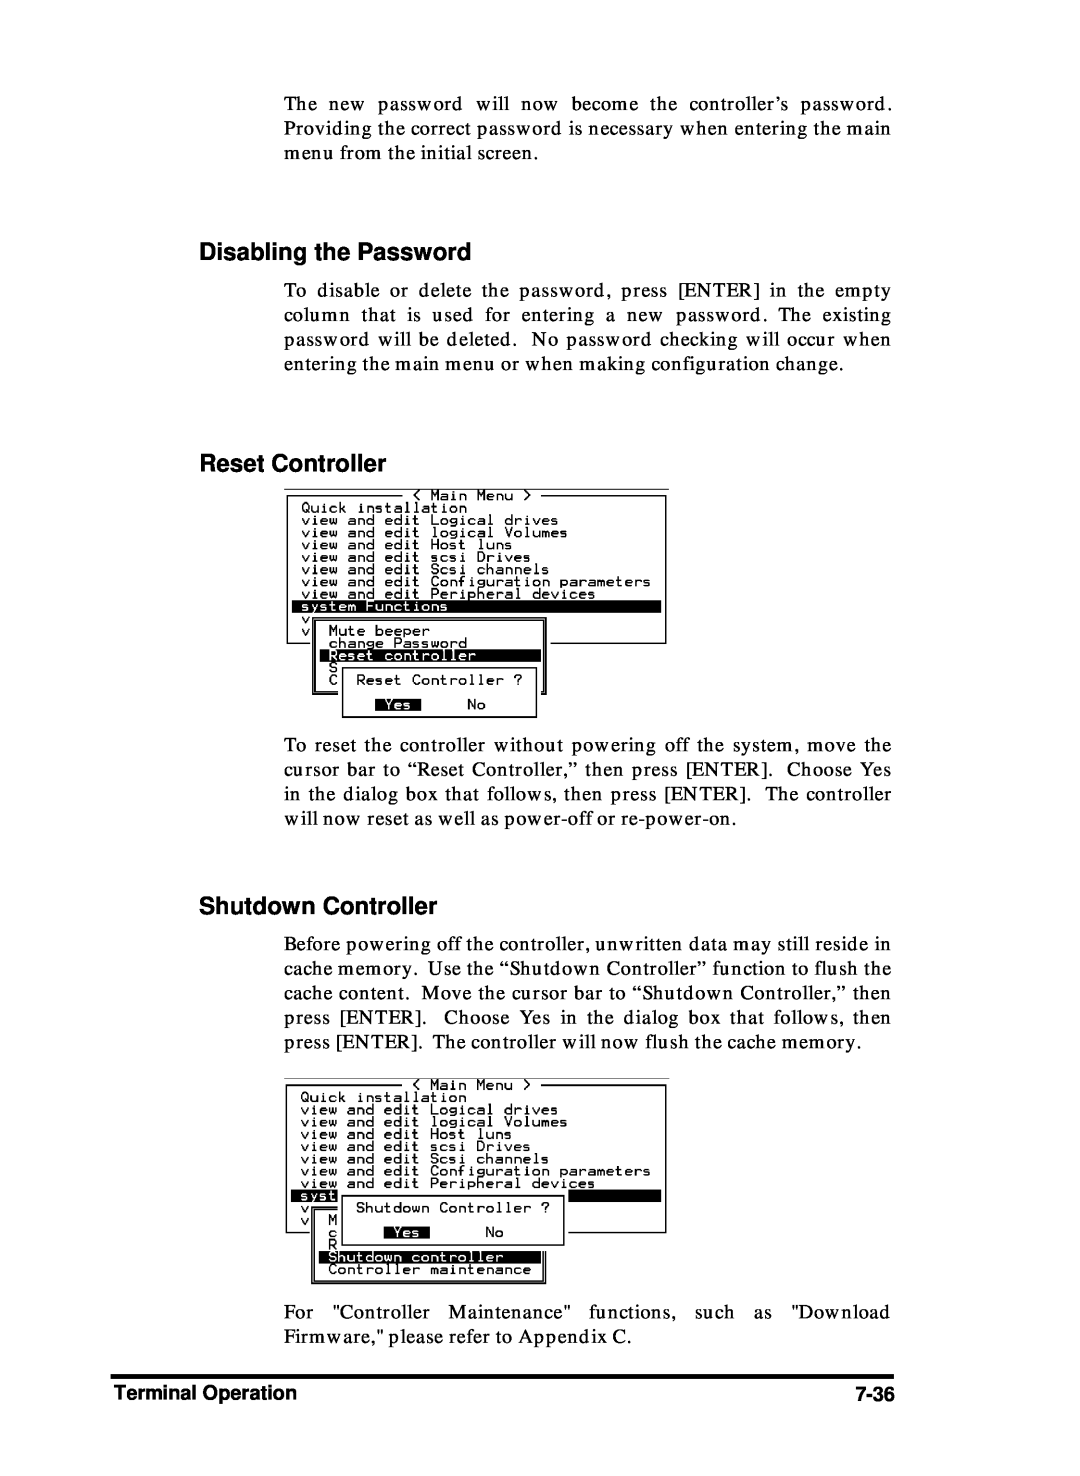 Compaq Infortrend manual Disabling the Password, Reset Controller, Shutdown Controller 